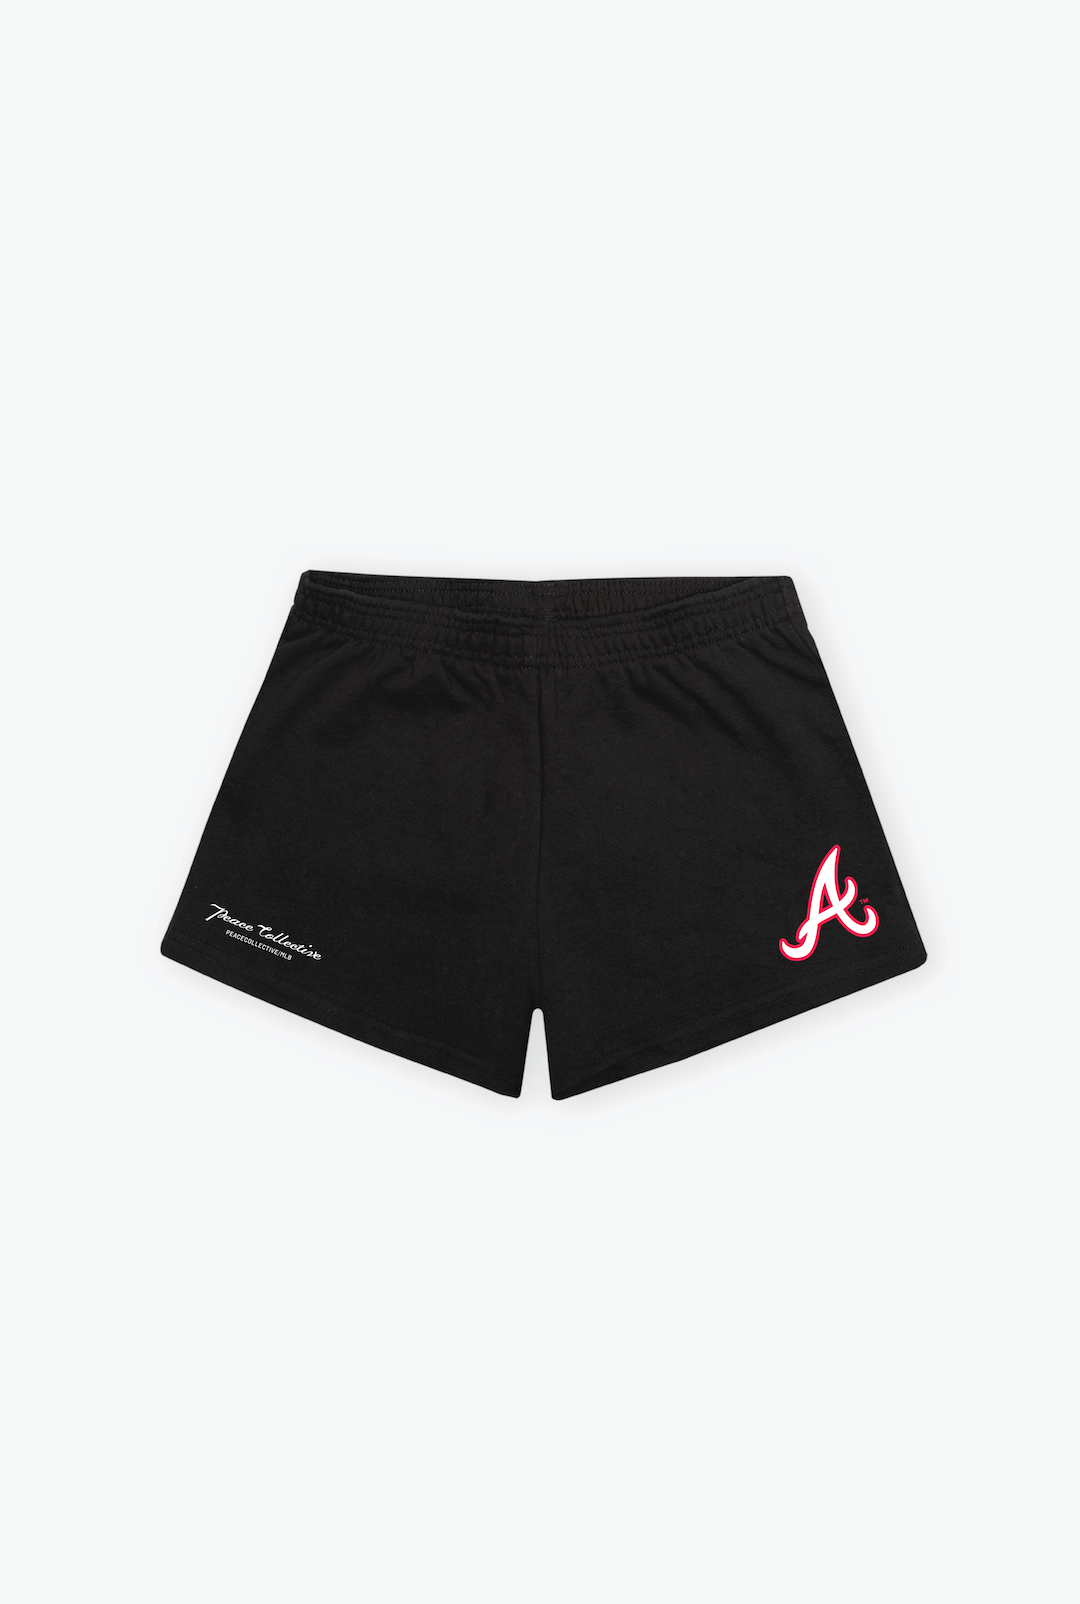 Atlanta Braves Logo Women's Fleece Shorts - Black